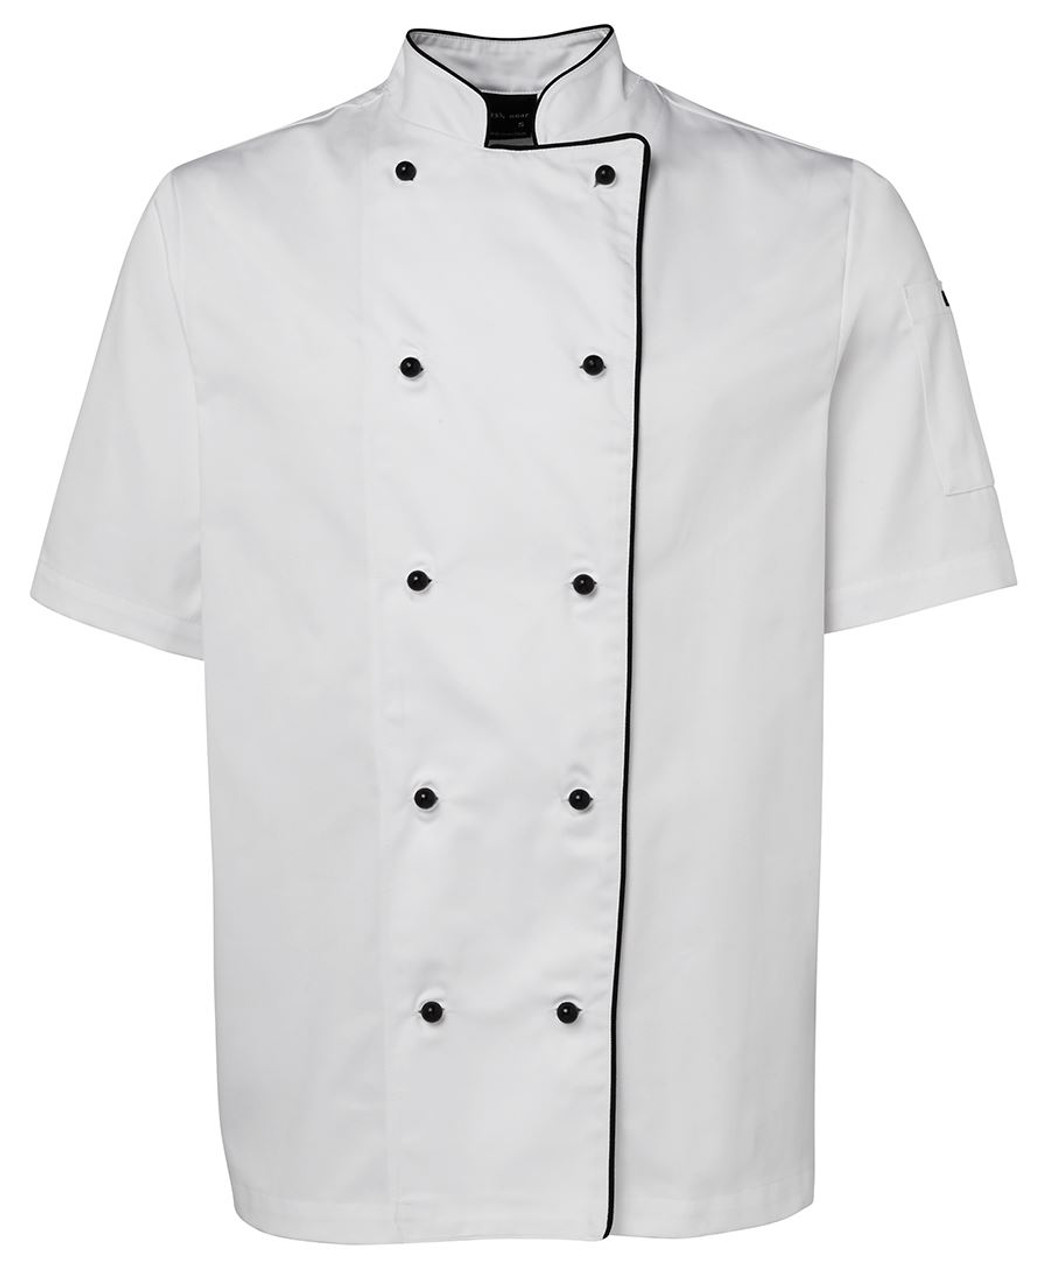 5CJ2 - S/S Unisex Chef Jacket - Online Workwear